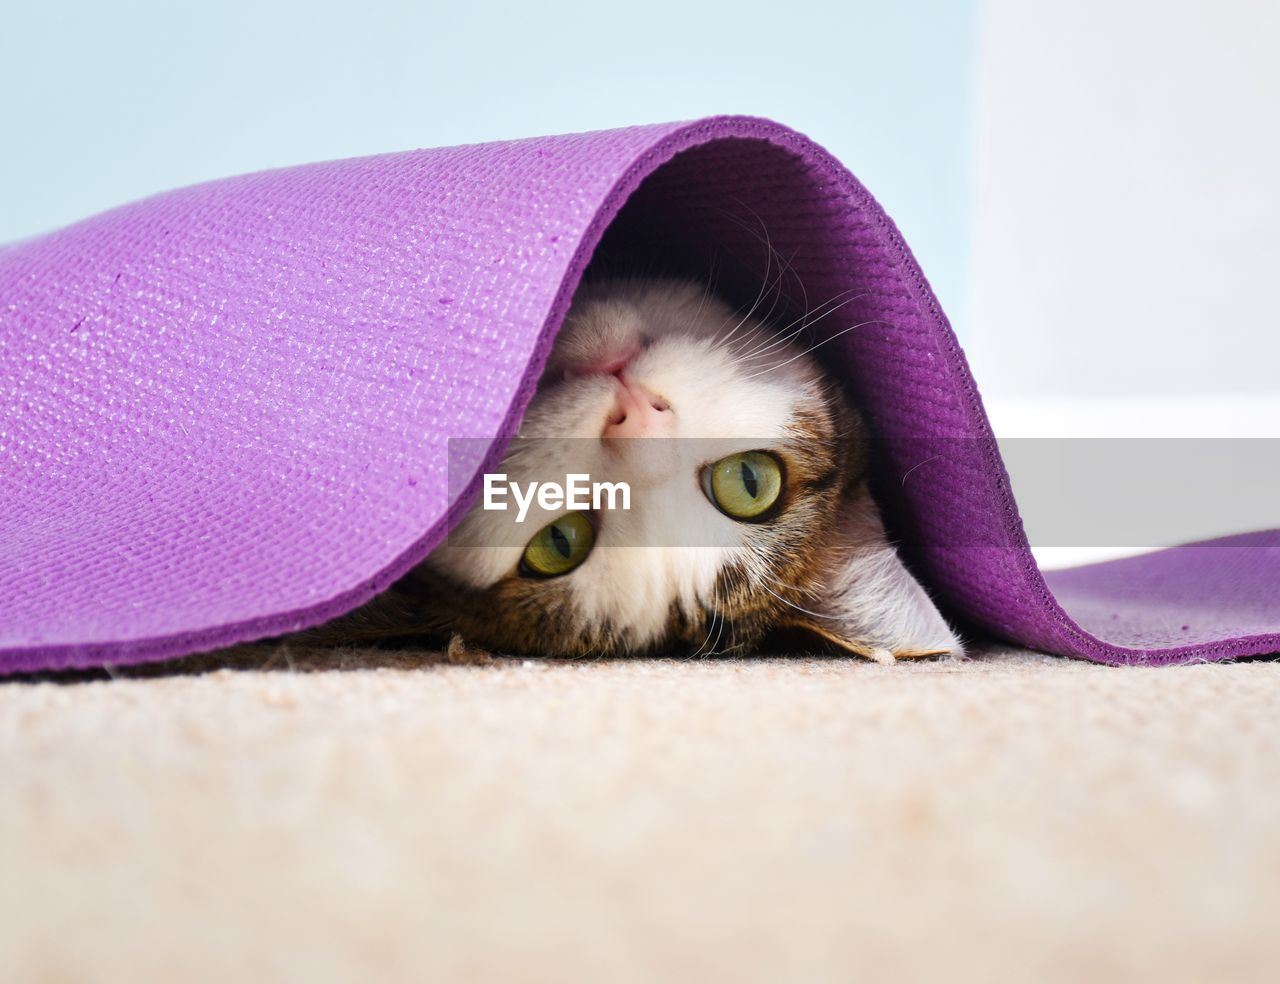 Close-up portrait of cat lying under purple yoga mat 